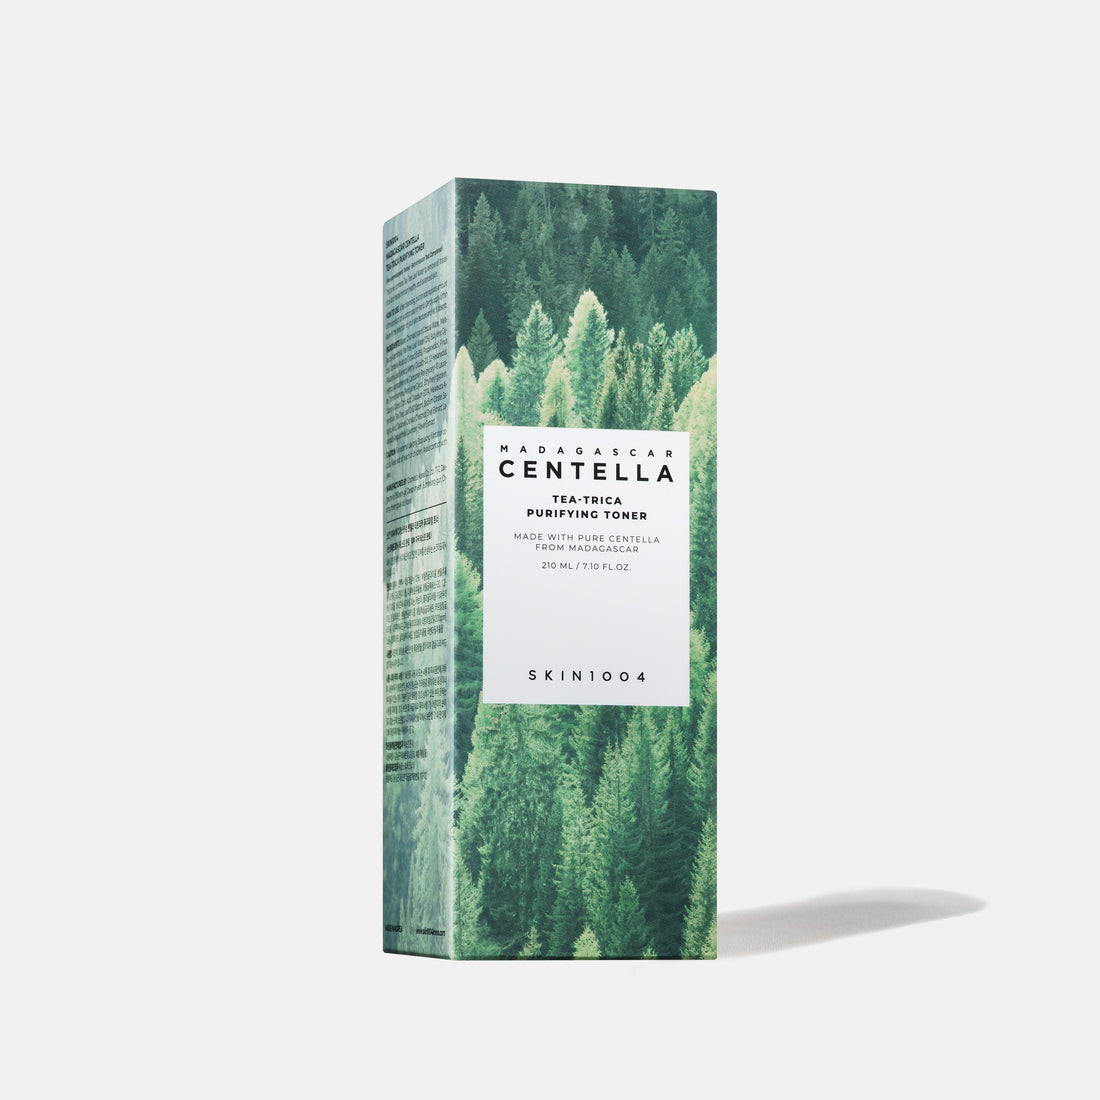 Skin1004 | Madagascar Centella Tea-Trica Purifying Toner